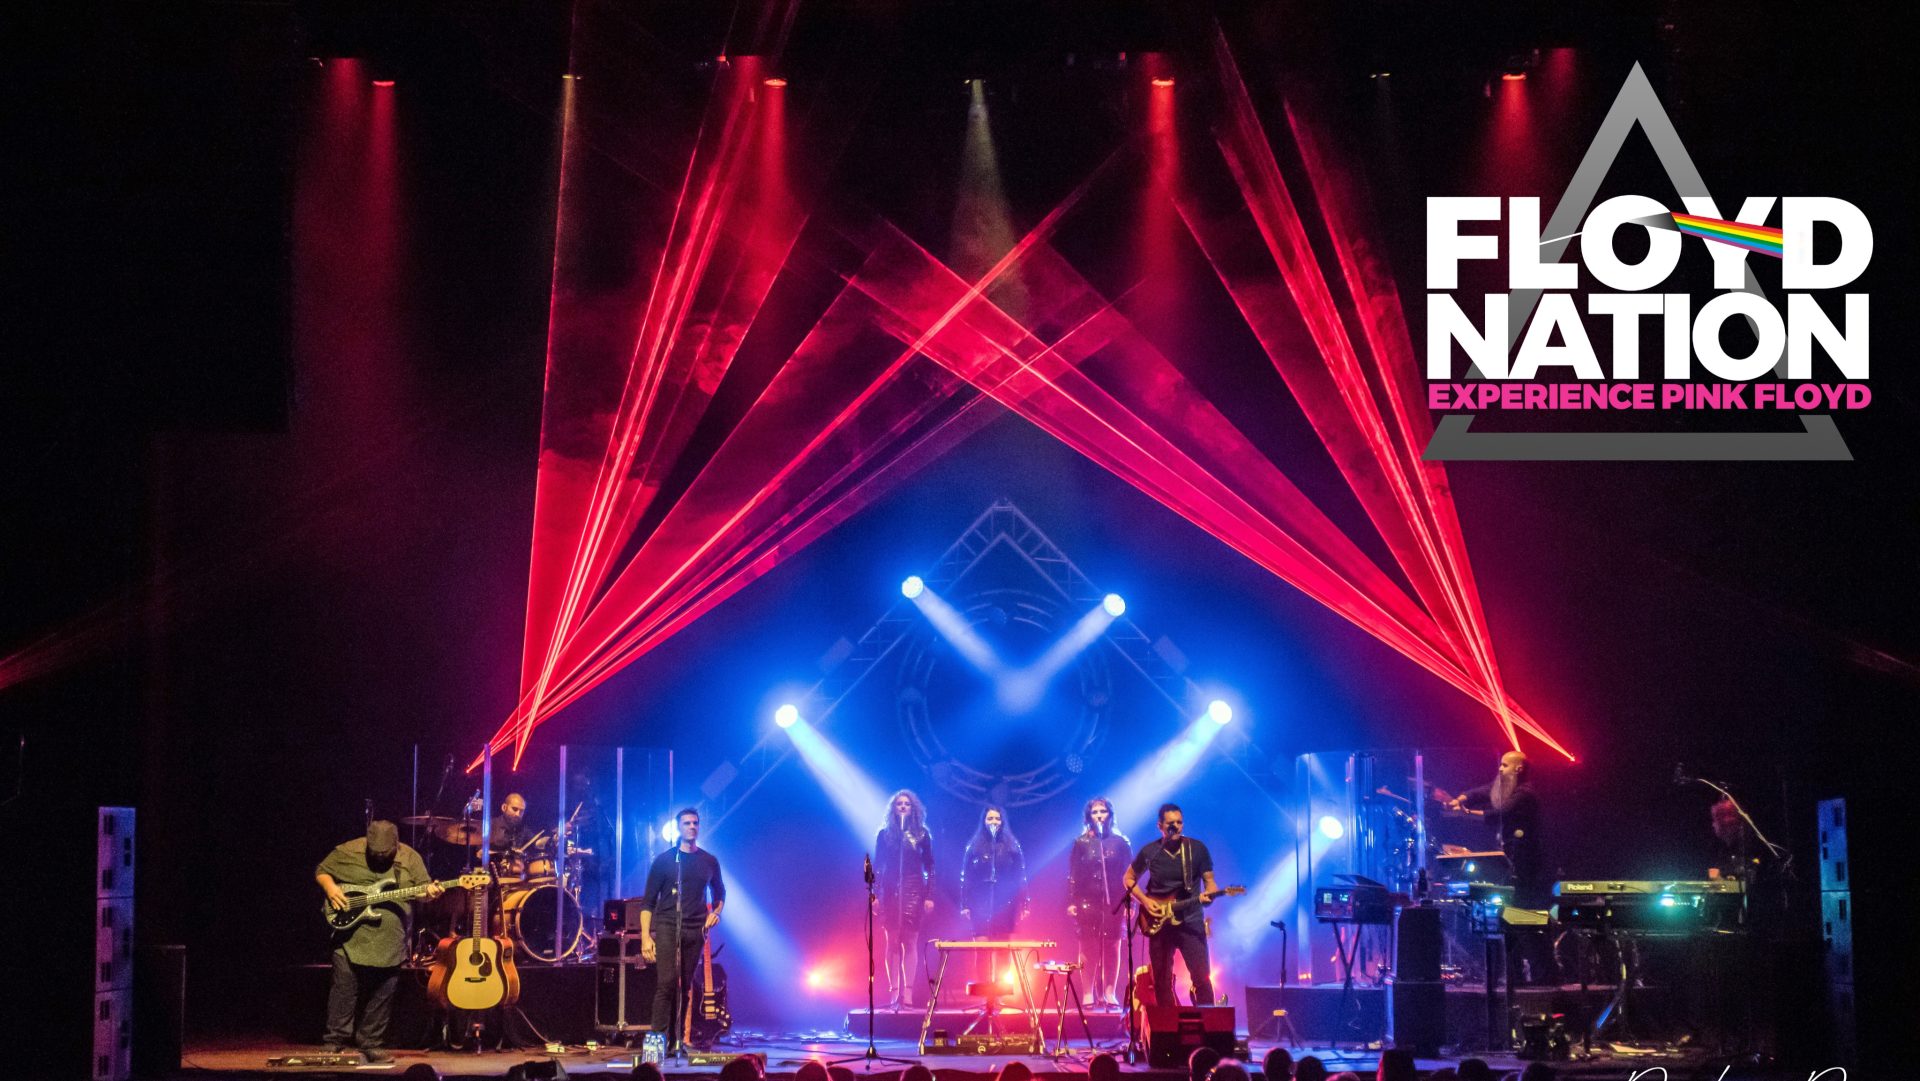 Floyd Nation: A Pink Floyd Experience